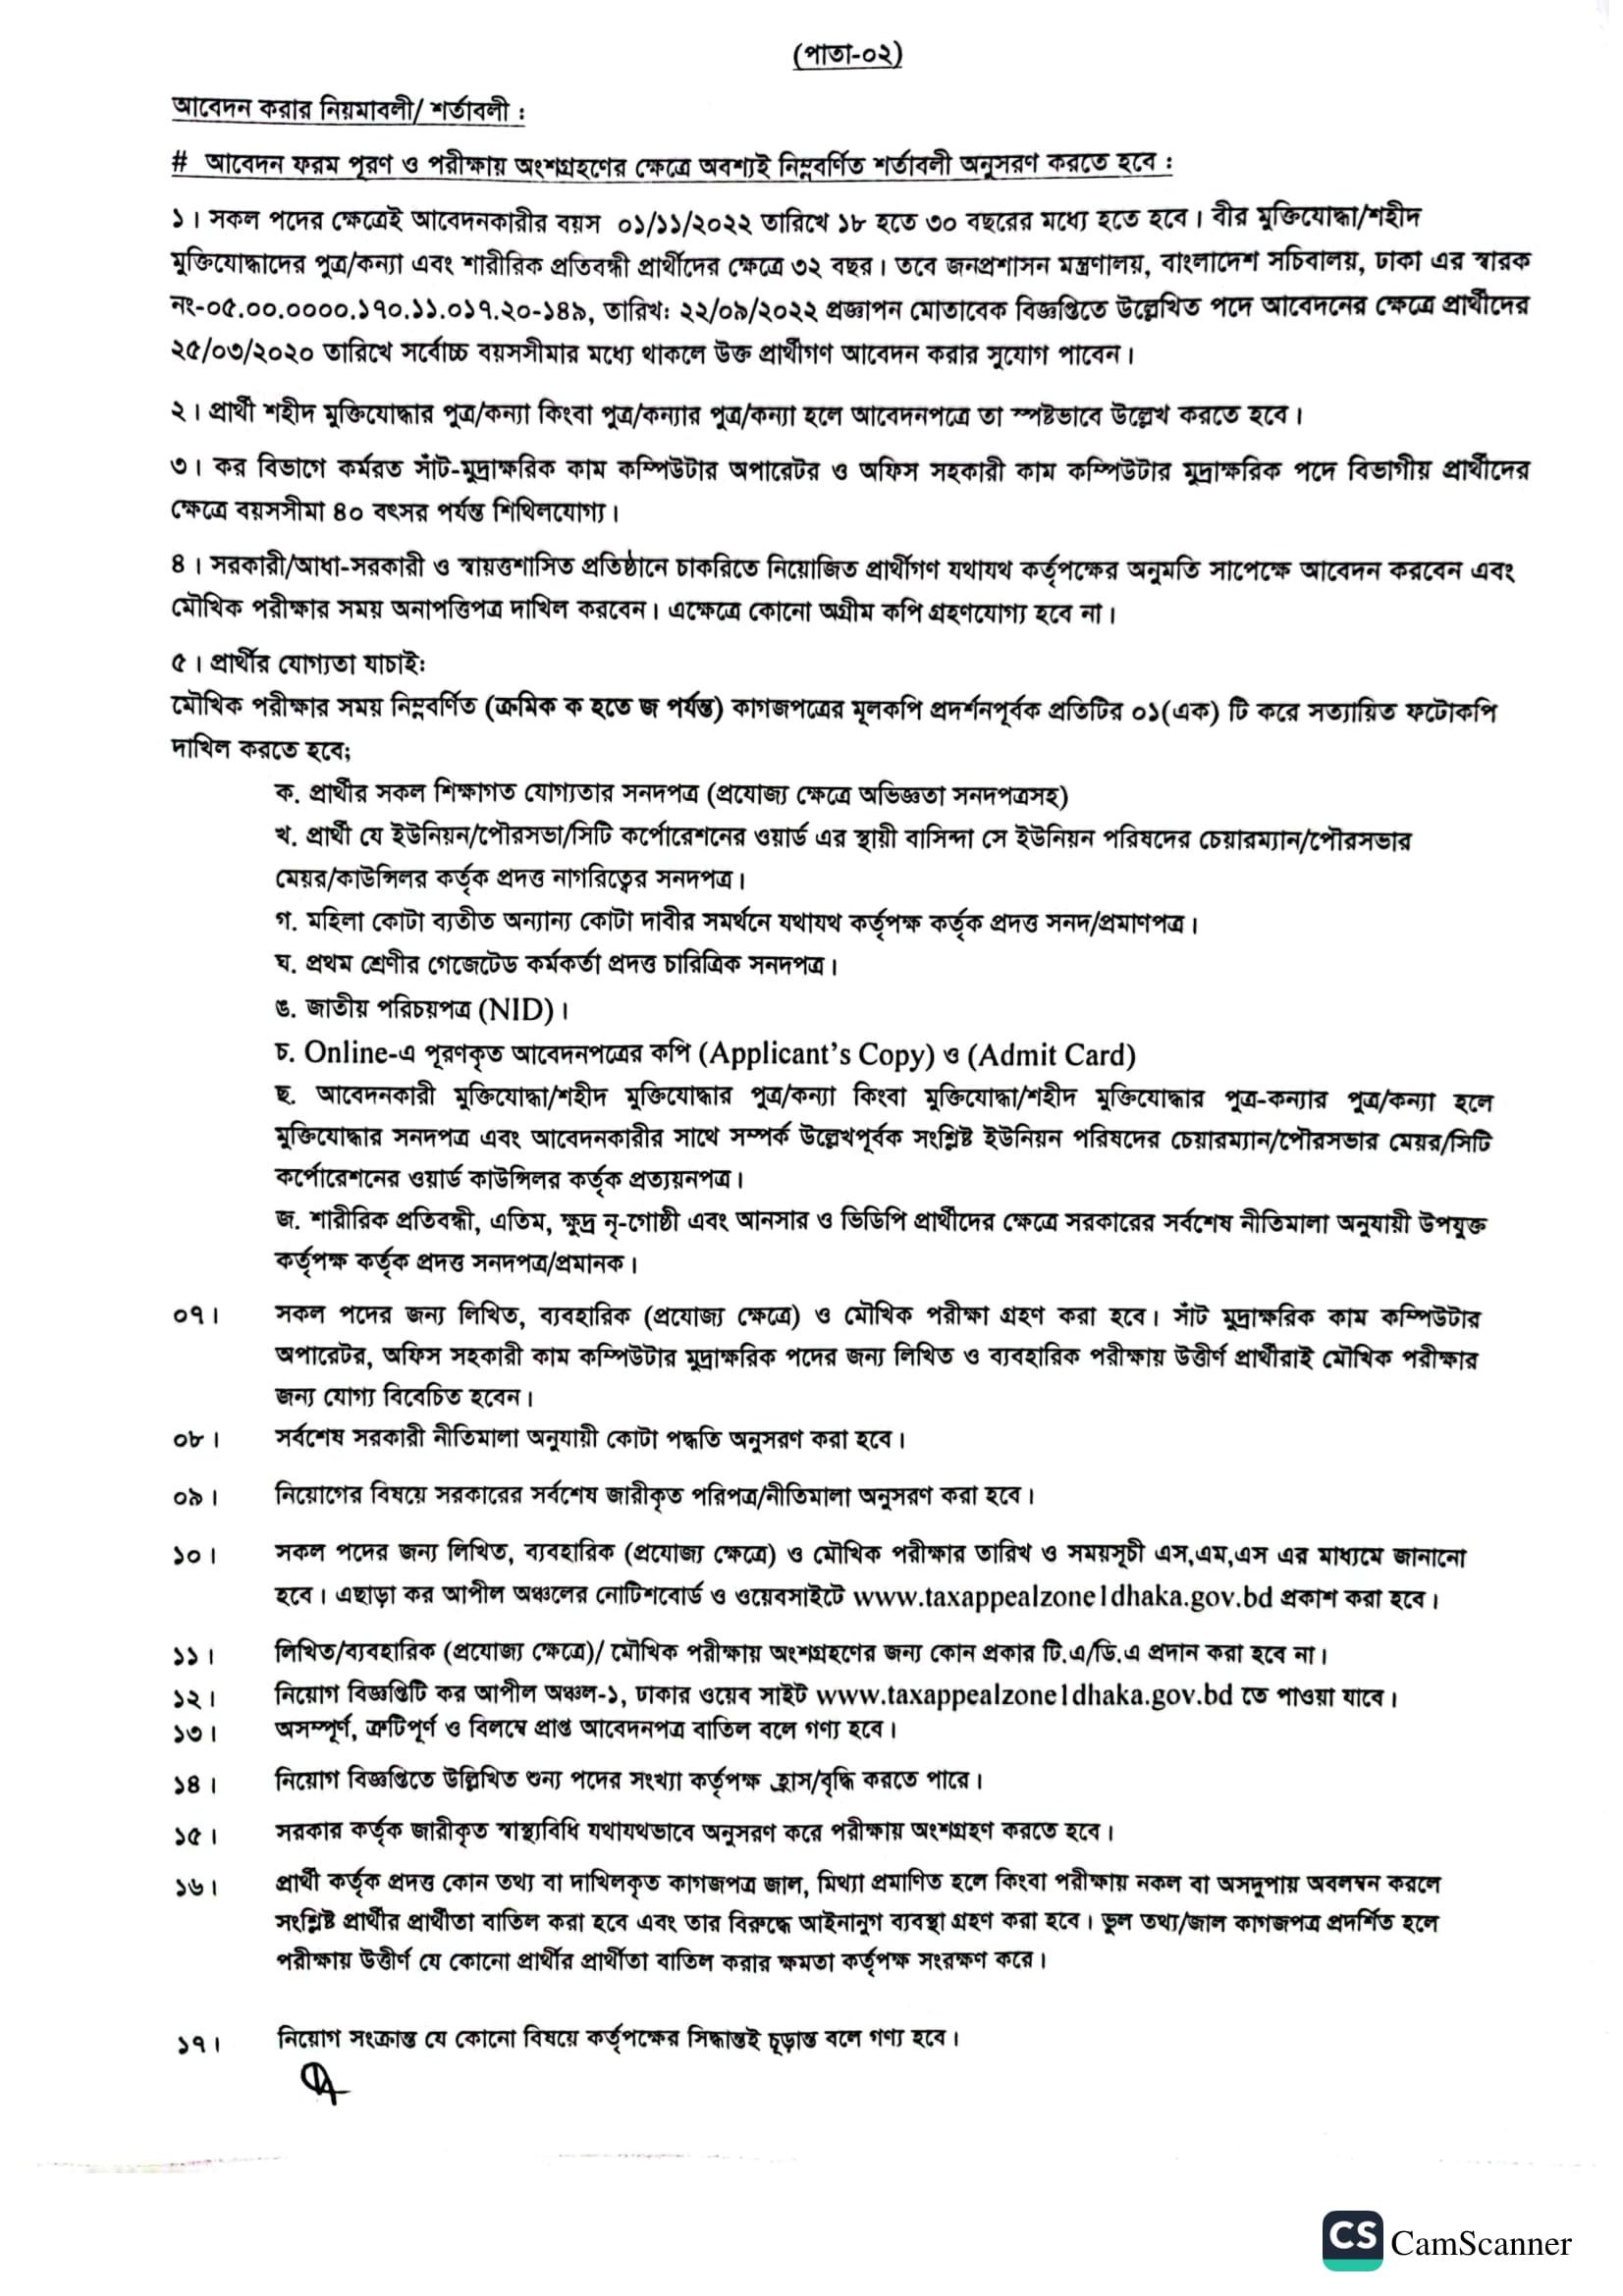 Taxes Appeal Zone-1 Dhaka Job Circular 2023